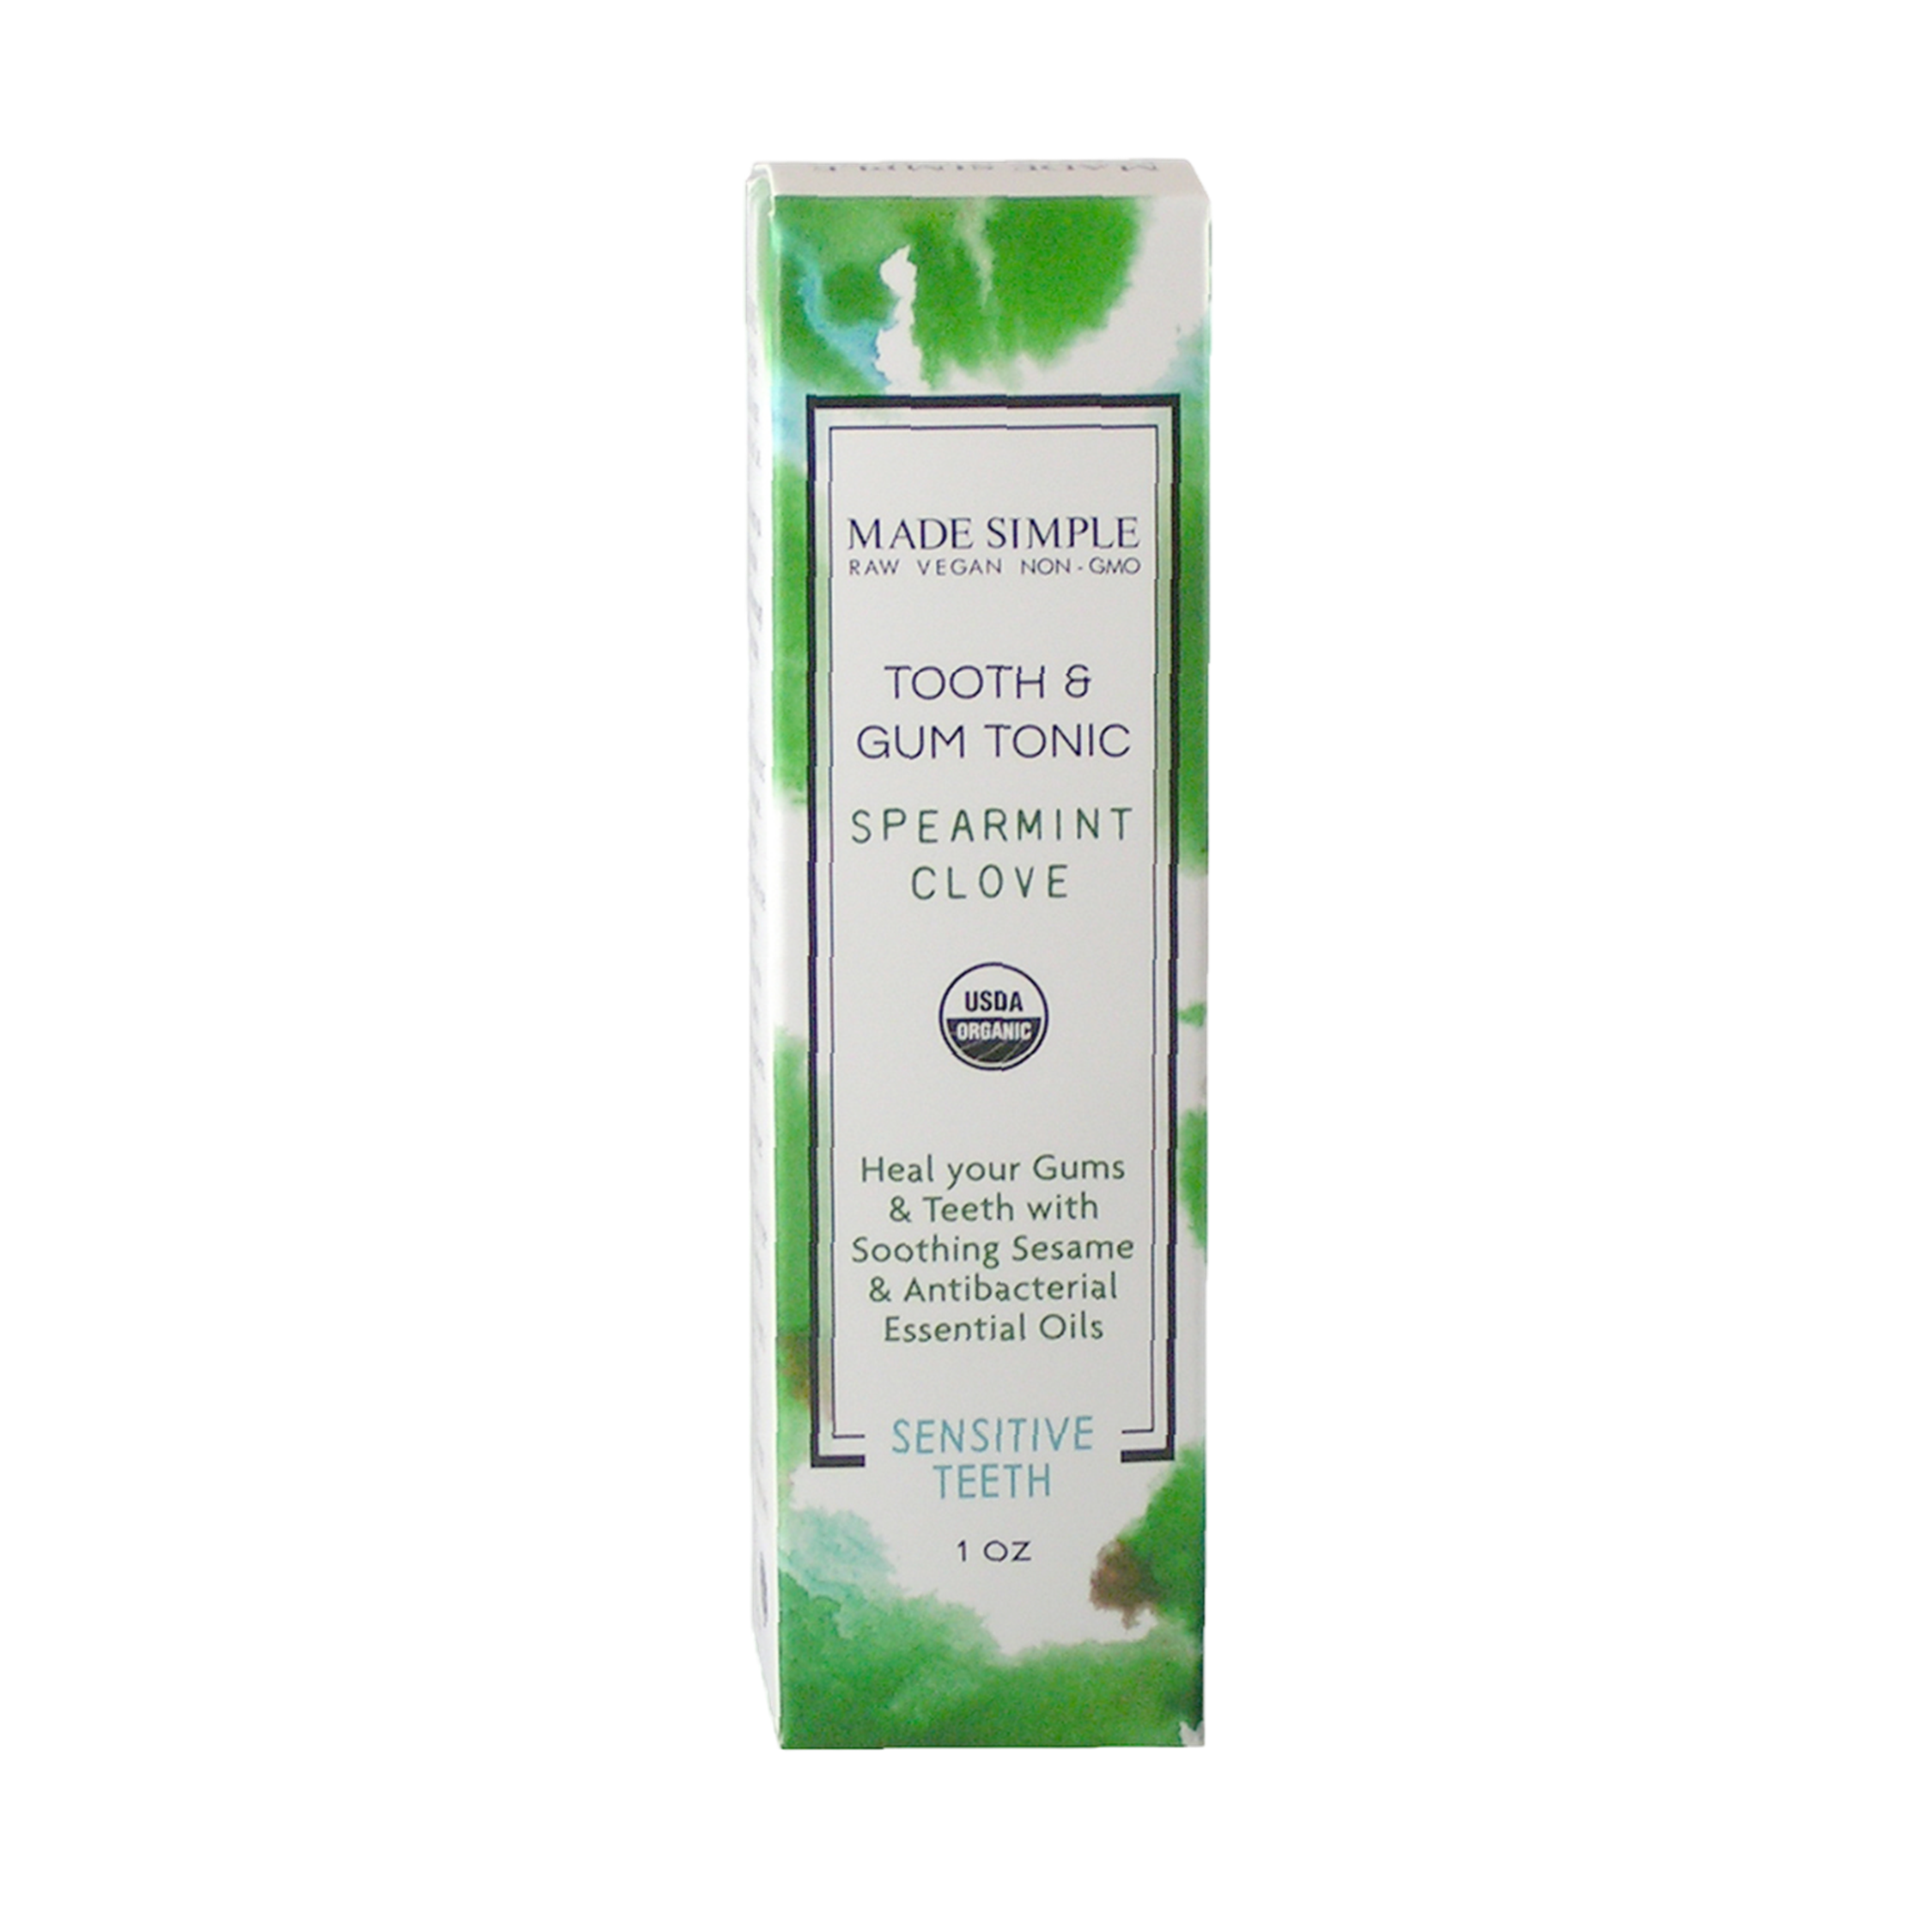 Made Simple Skin Care Tooth Gum Tonic Spearmint Clove USDA Certified Organic Raw Vegan NonGMO